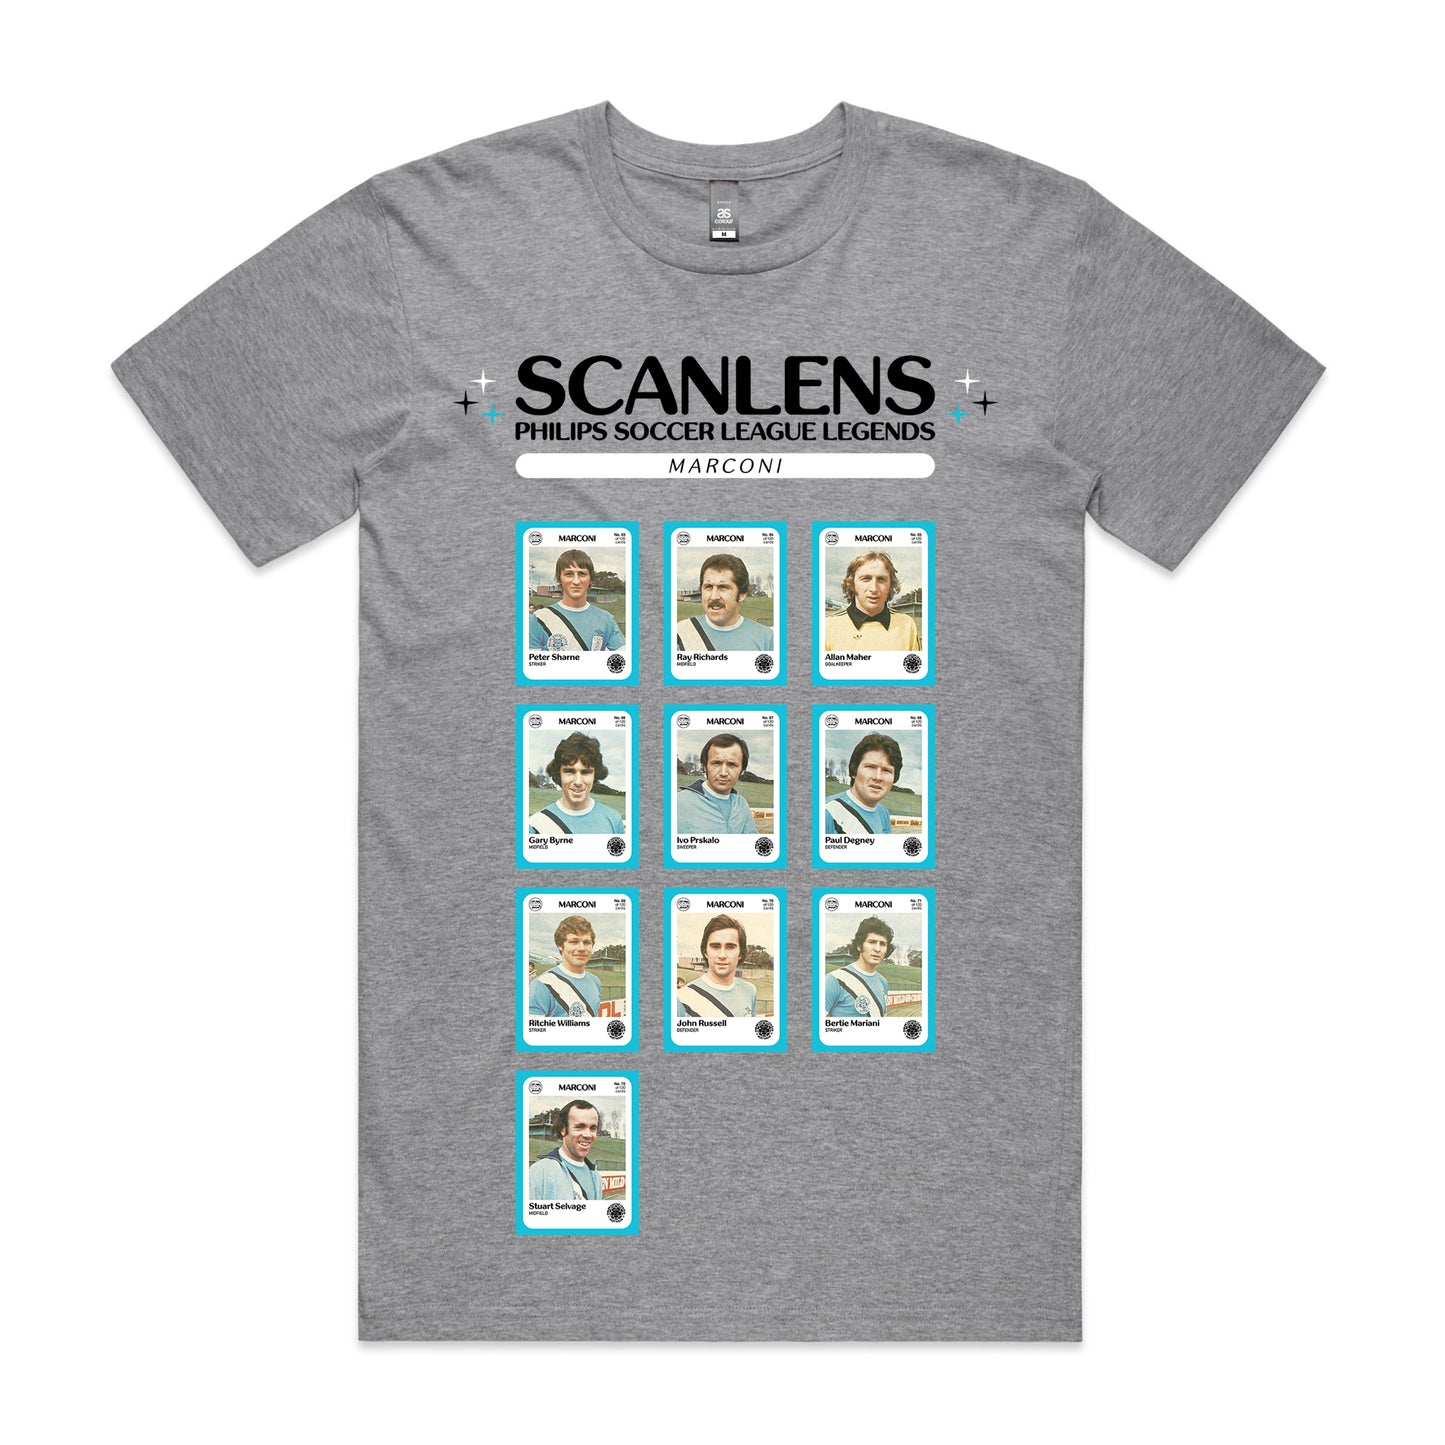 Scanlens Philips Soccer League Legends Series T-shirt